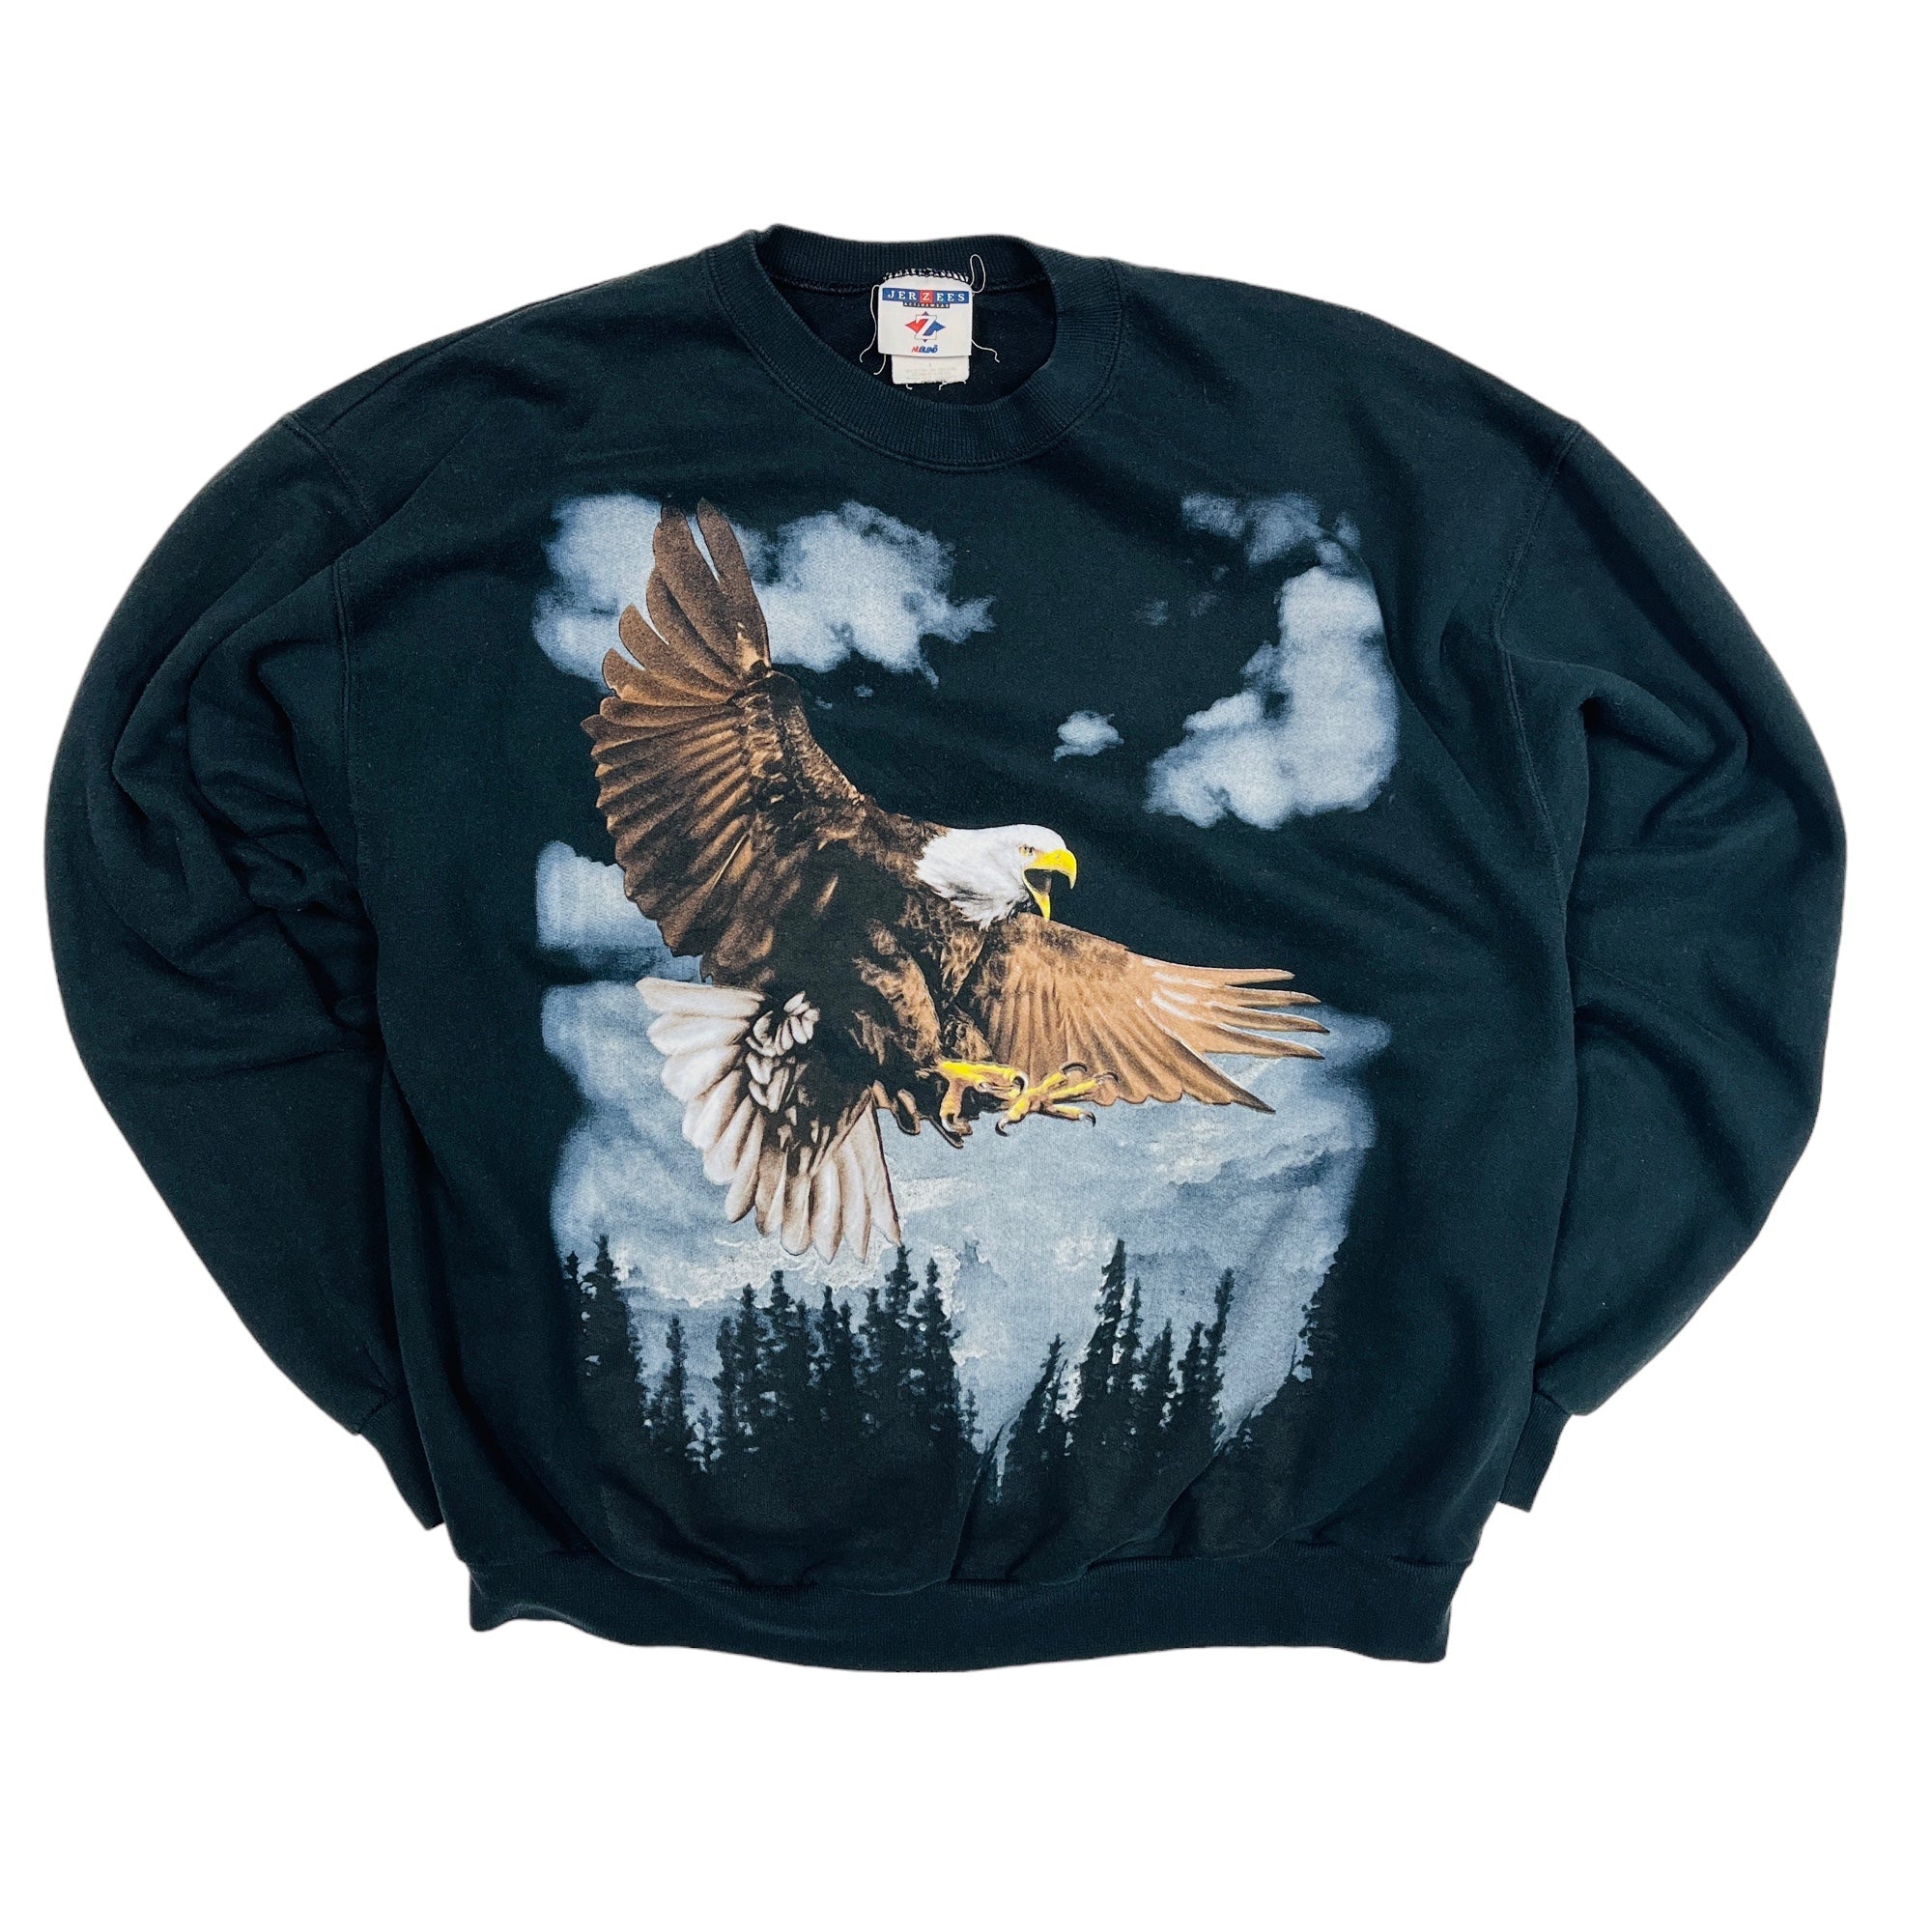 90's Eagle Graphic Sweatshirt - Medium